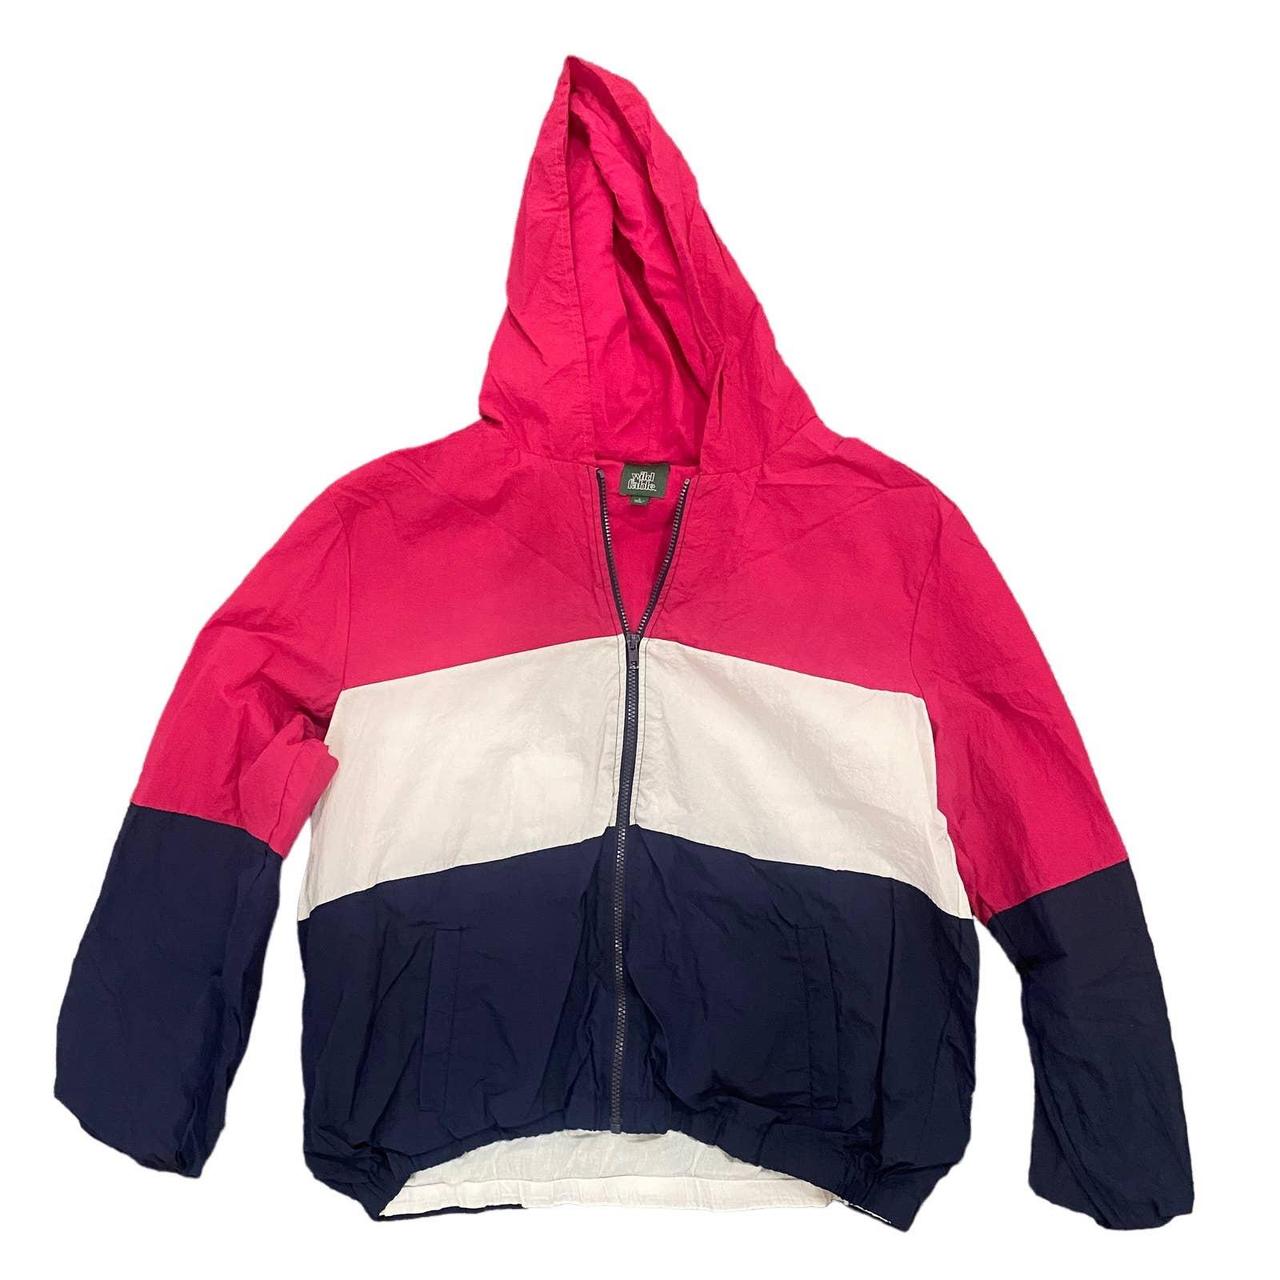 pink wild fable jacket - Depop